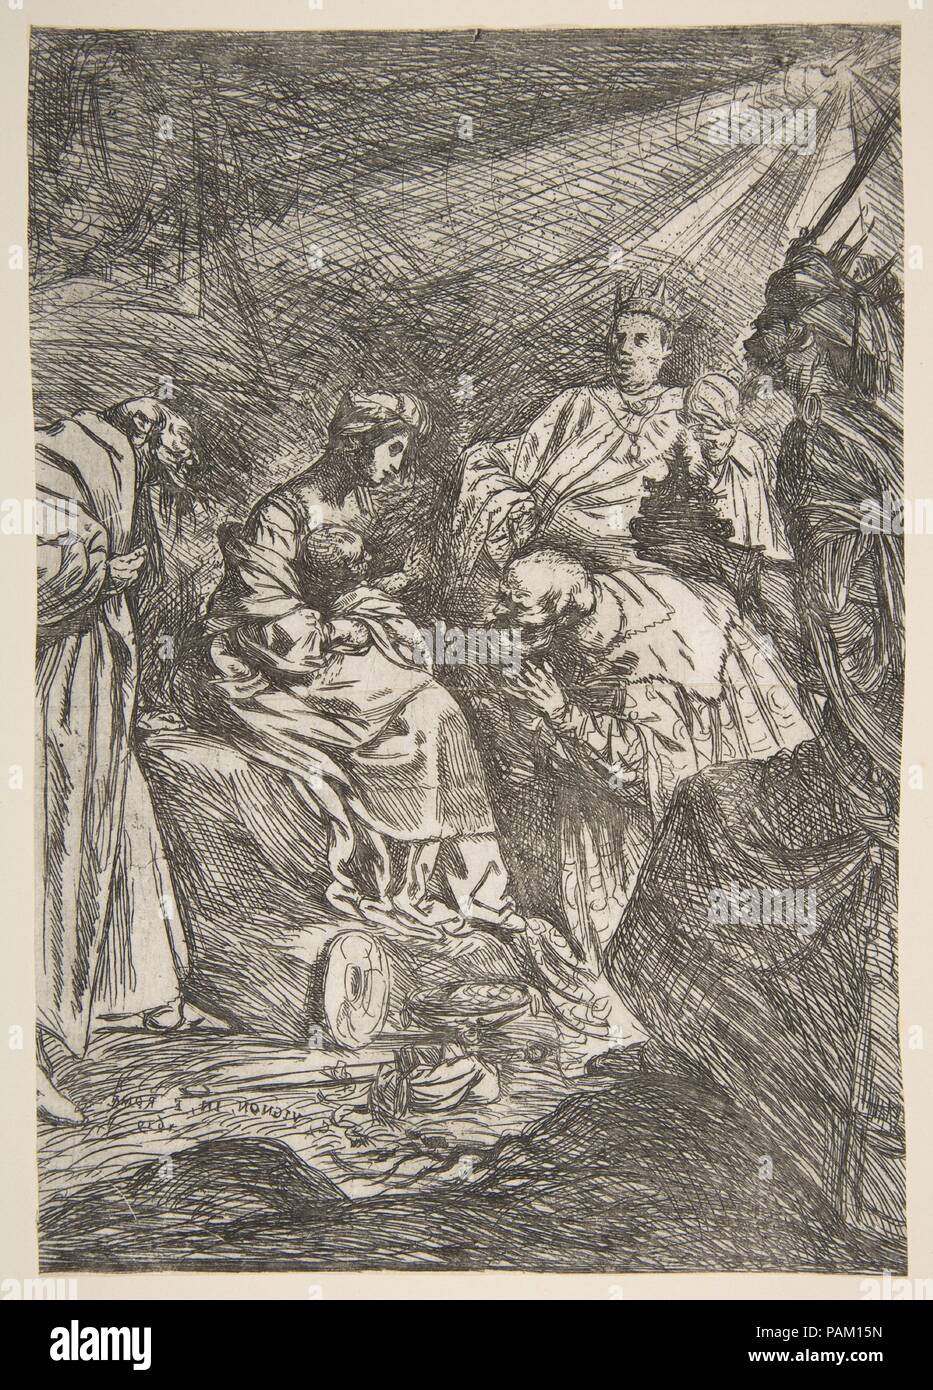 The Adoration of the Magi. Artist: Claude Vignon (French, Tours 1593-1670 Paris). Dimensions: sheet: 9 7/16 x 6 9/16 in. (24 x 16.7 cm). Date: 1619. Museum: Metropolitan Museum of Art, New York, USA. Stock Photo